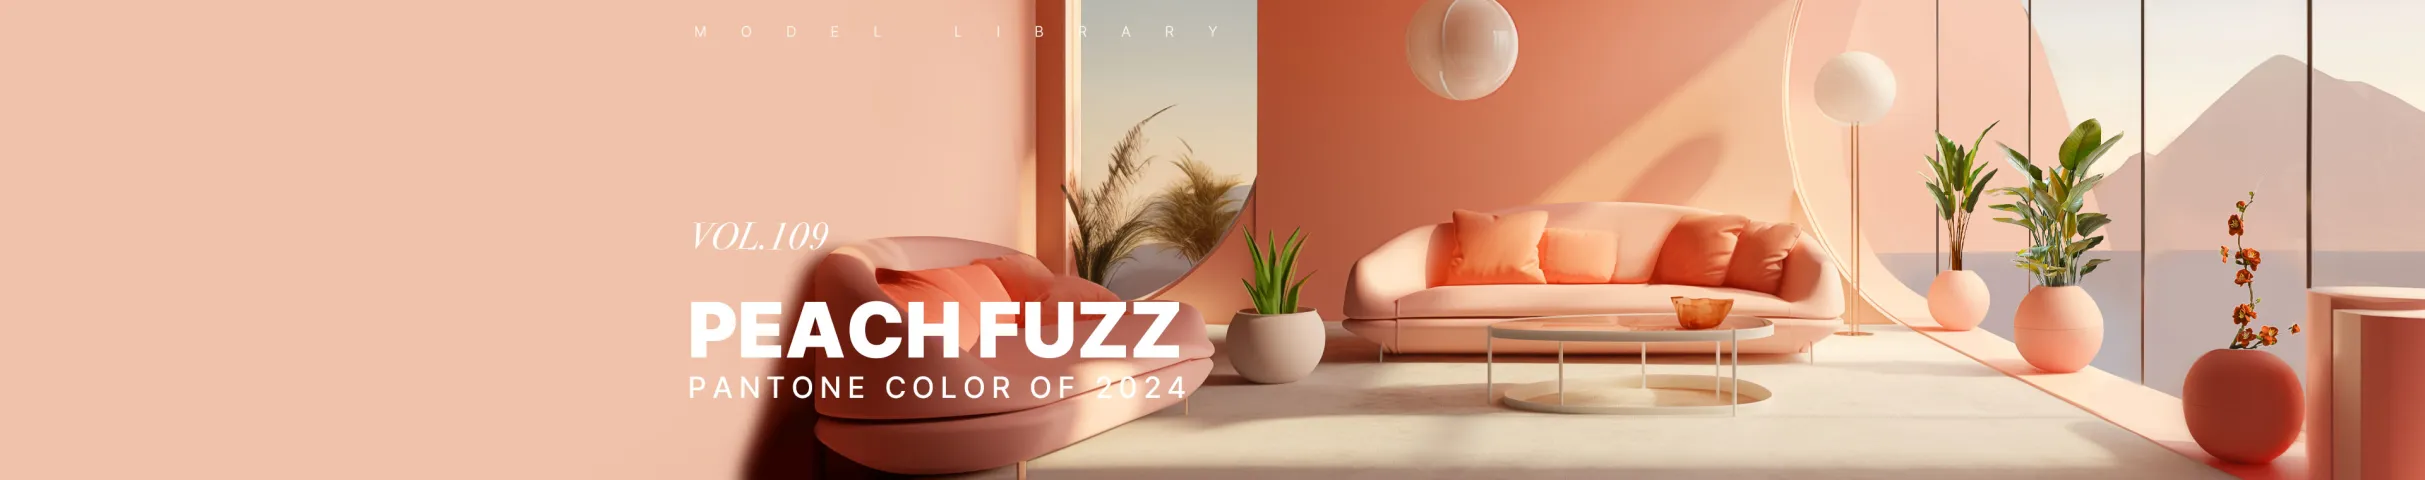 Peach Fuzz Pantone 2024 Color